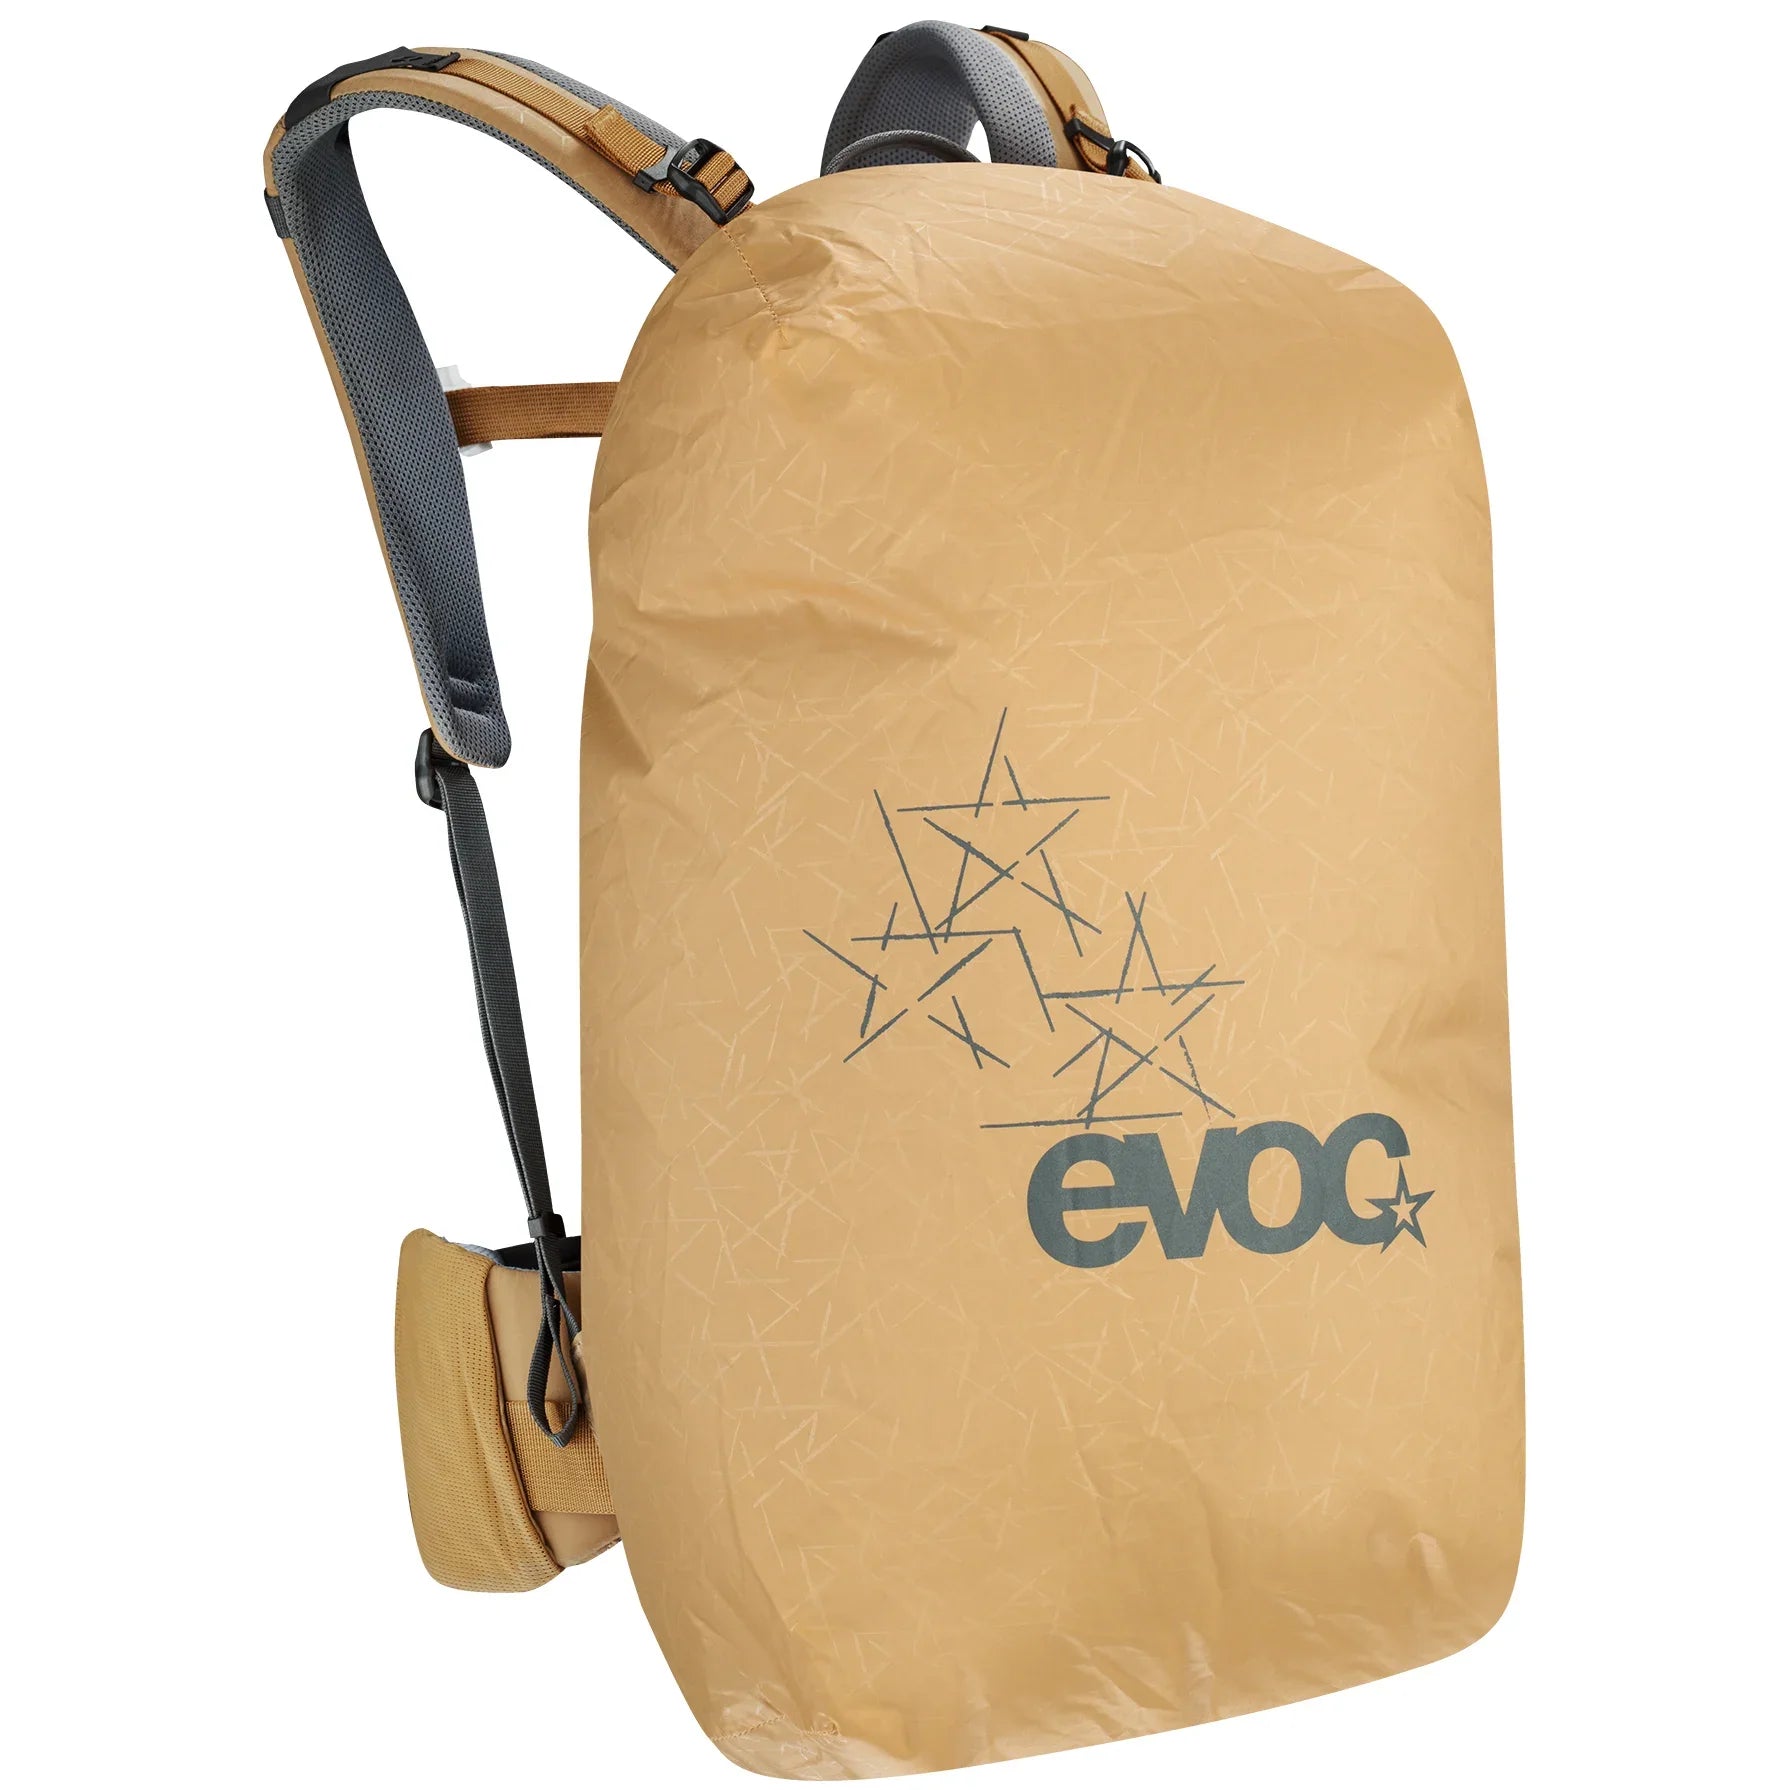 Evoc Protector Backpacks Neo S/M Rucksack 52 cm - carbon grey